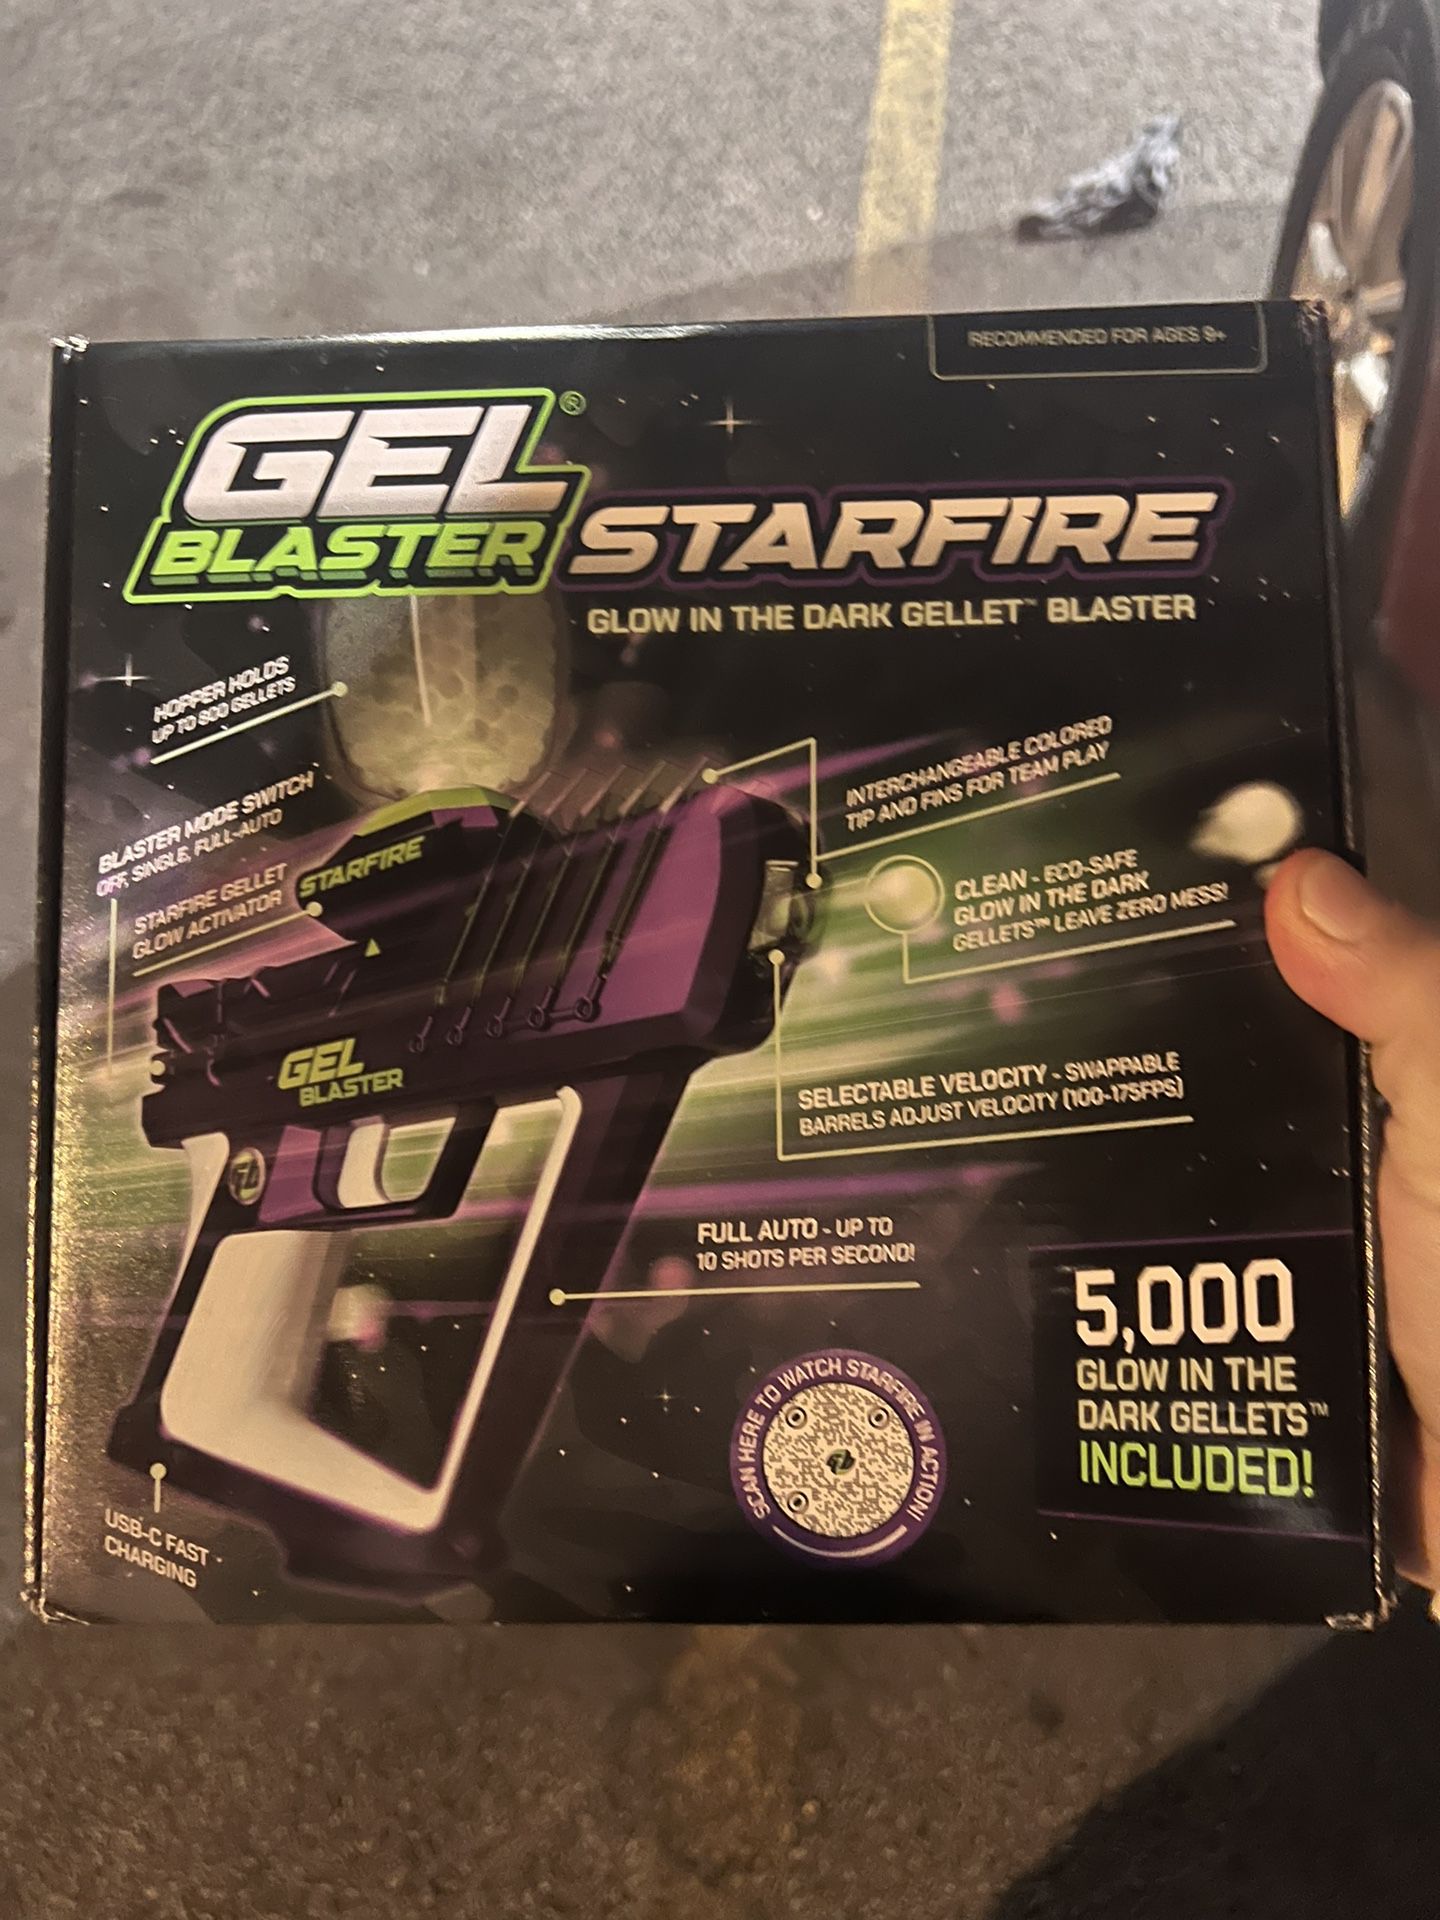 Gel Blaster Star fire Gun 